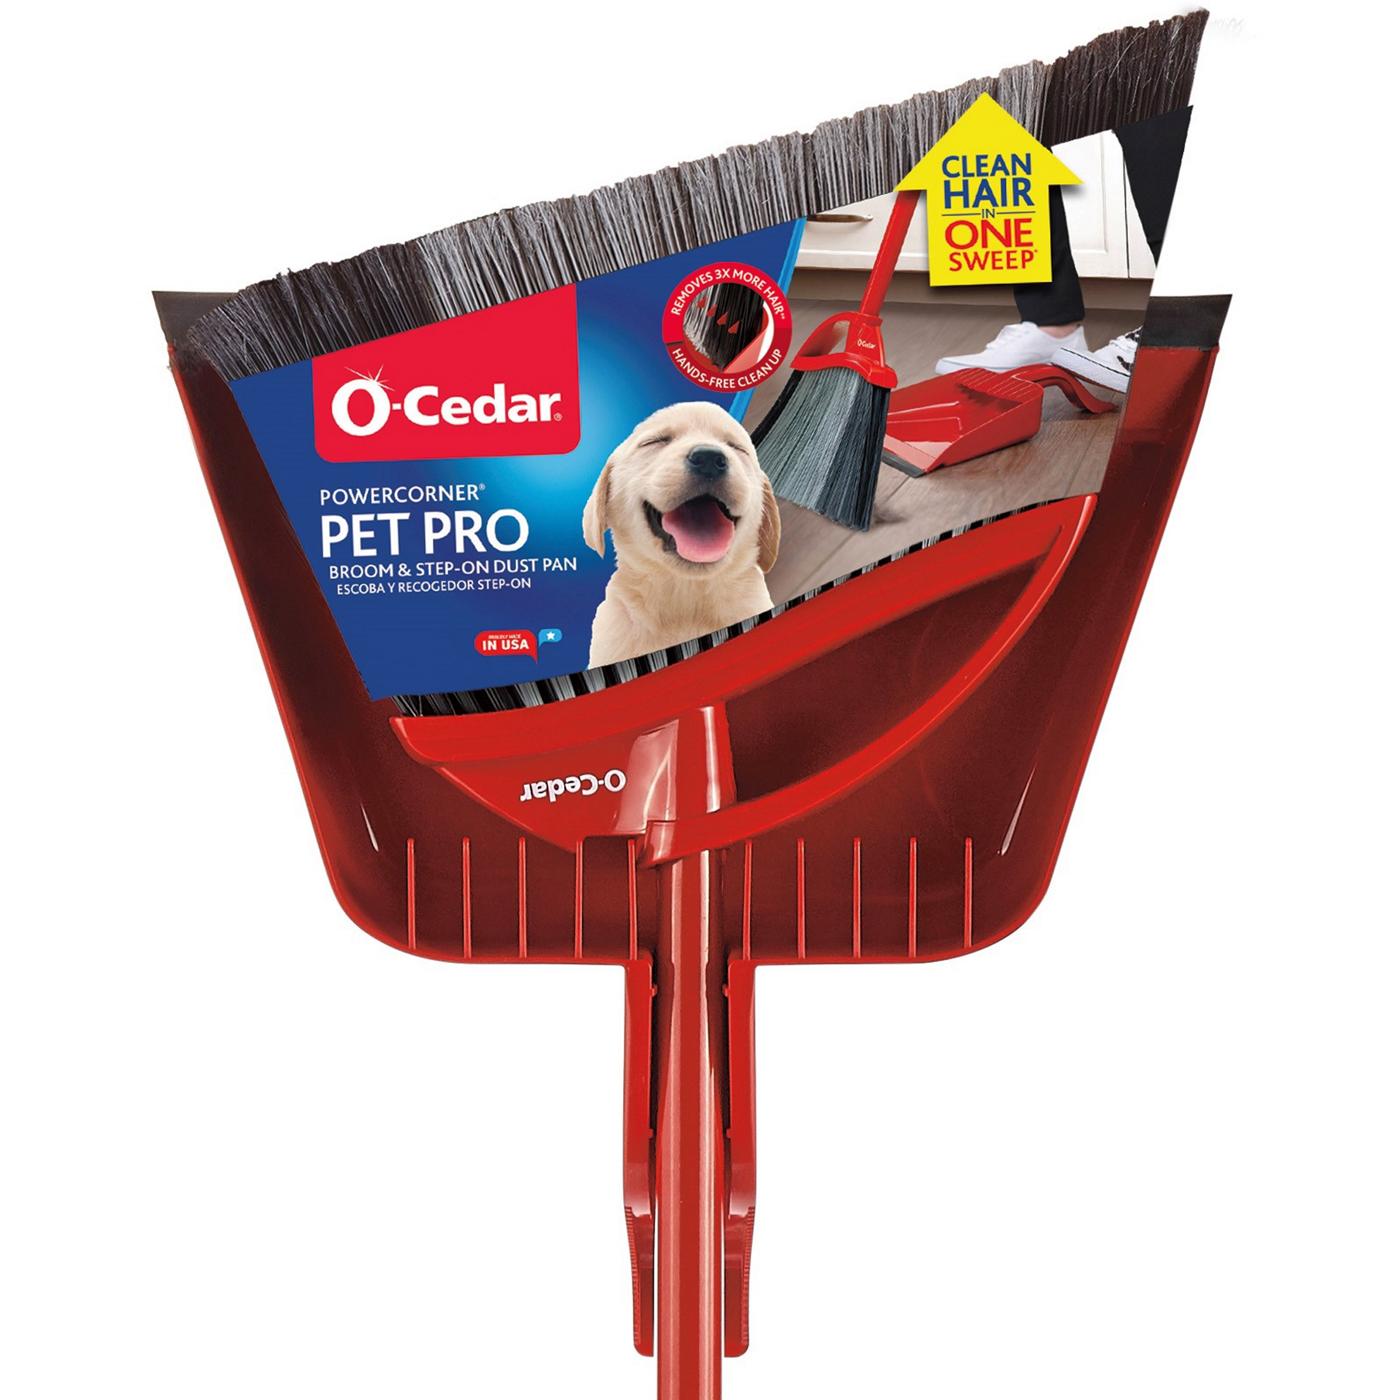 O-Cedar PowerCorner Pet Pro Broom with Step-On Dust Pan; image 1 of 9